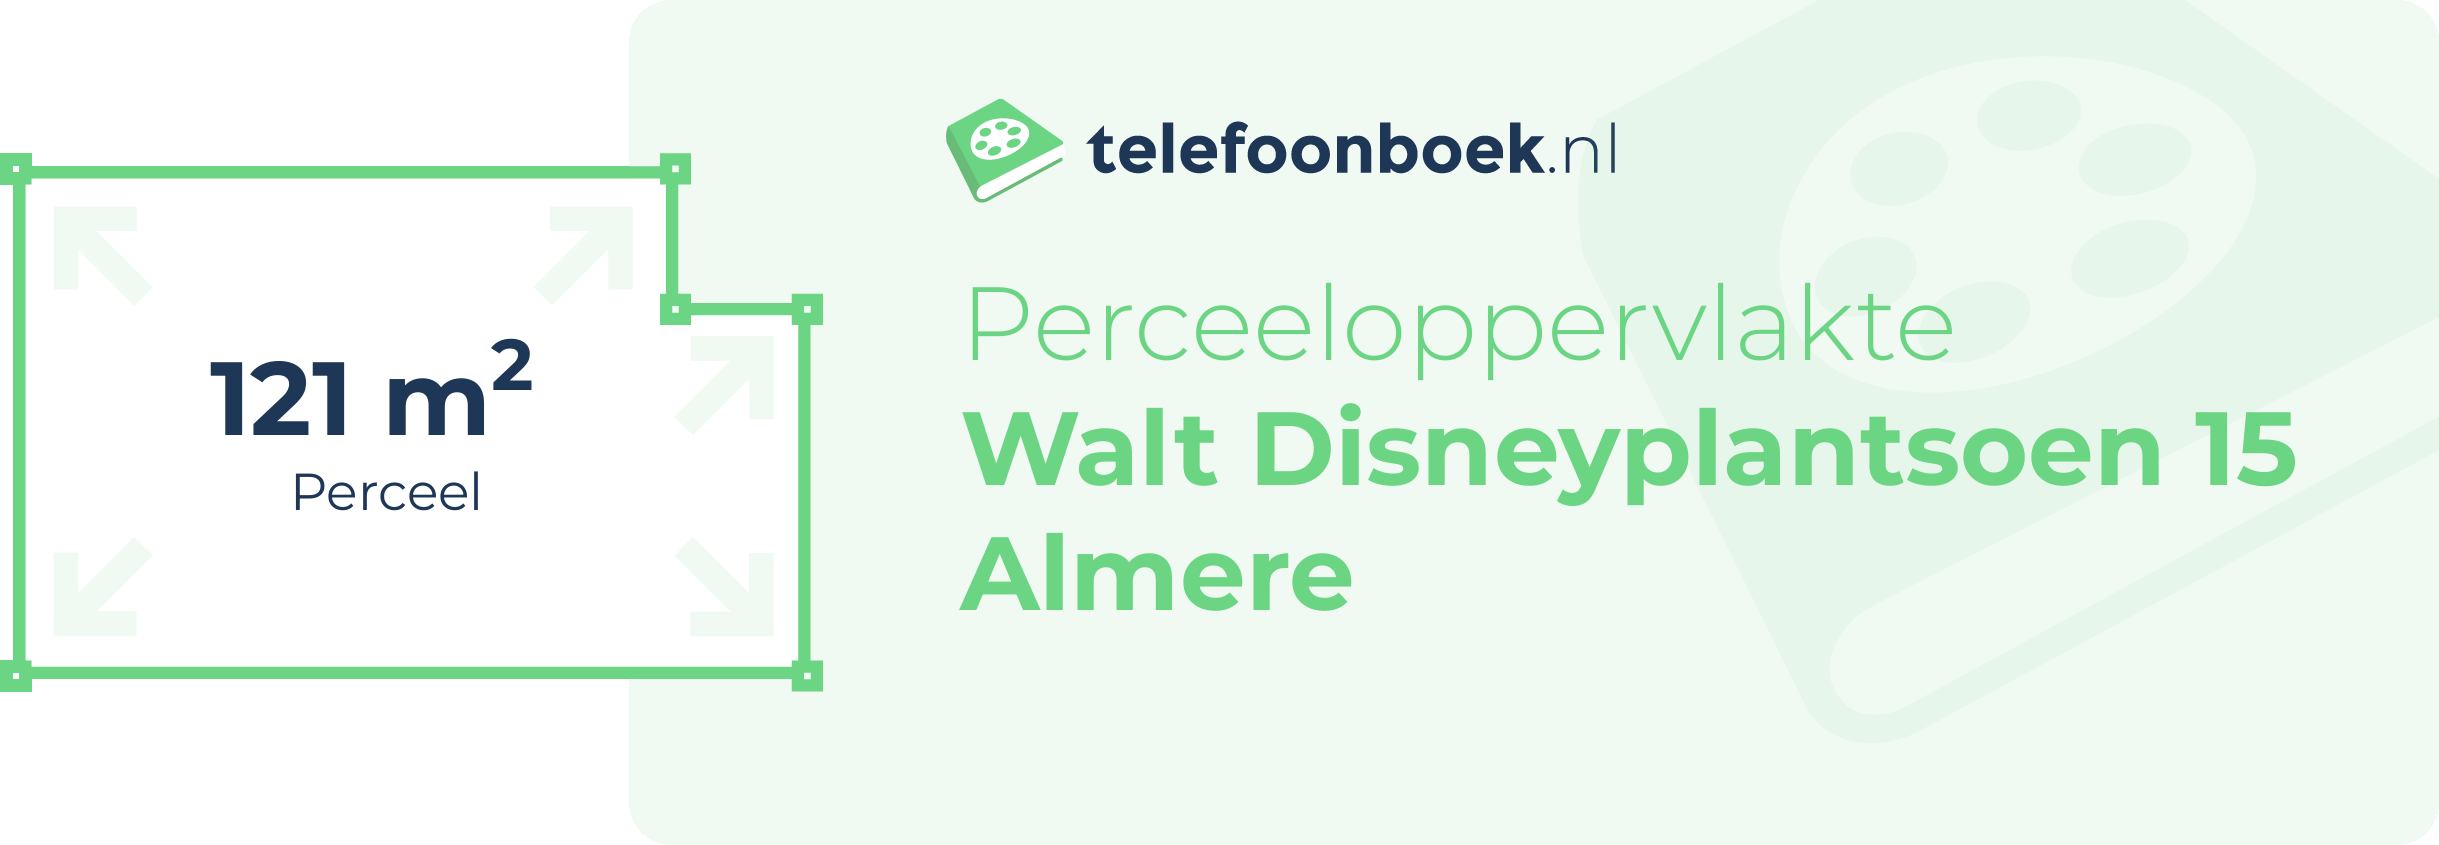 Perceeloppervlakte Walt Disneyplantsoen 15 Almere